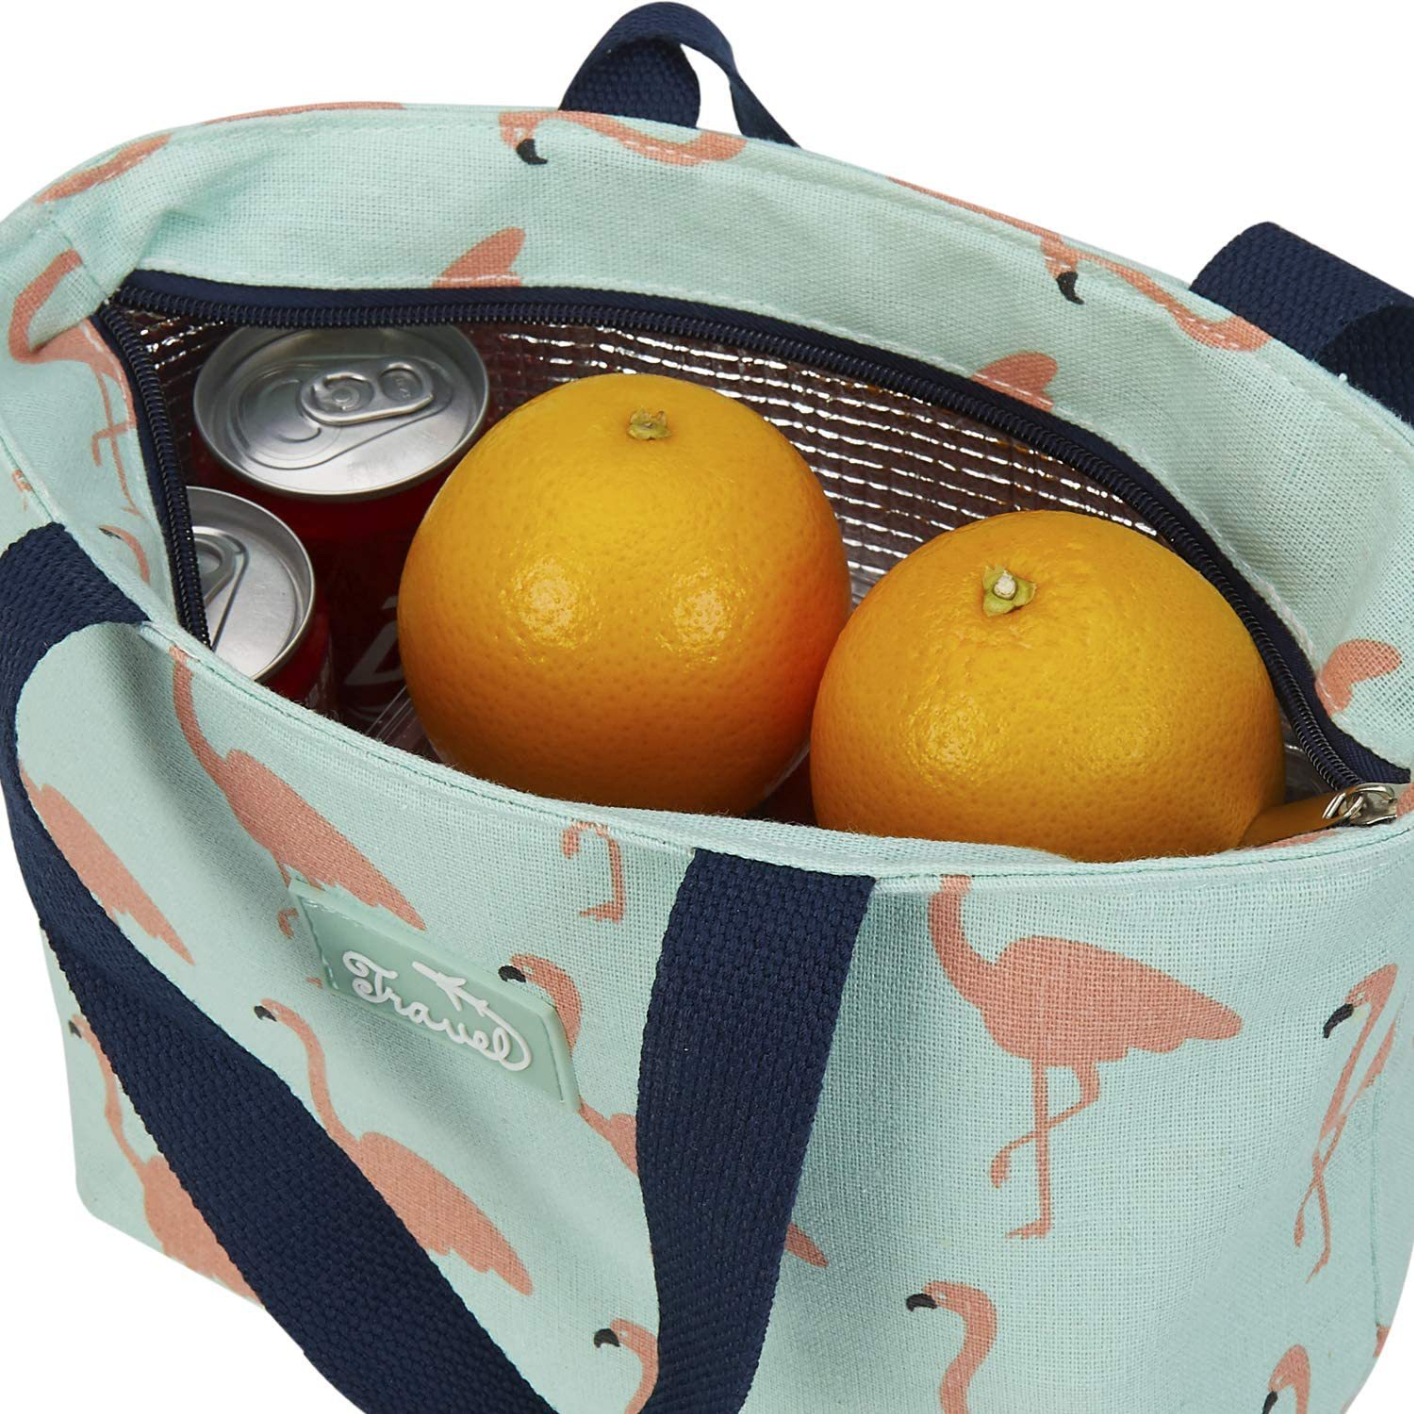 TA03-1 Lunch Bag for Women Funny Cartoon Kids Bento Cooler Bags Flamingo Thermal Breakfast Food Box Portable Picnic Travel
